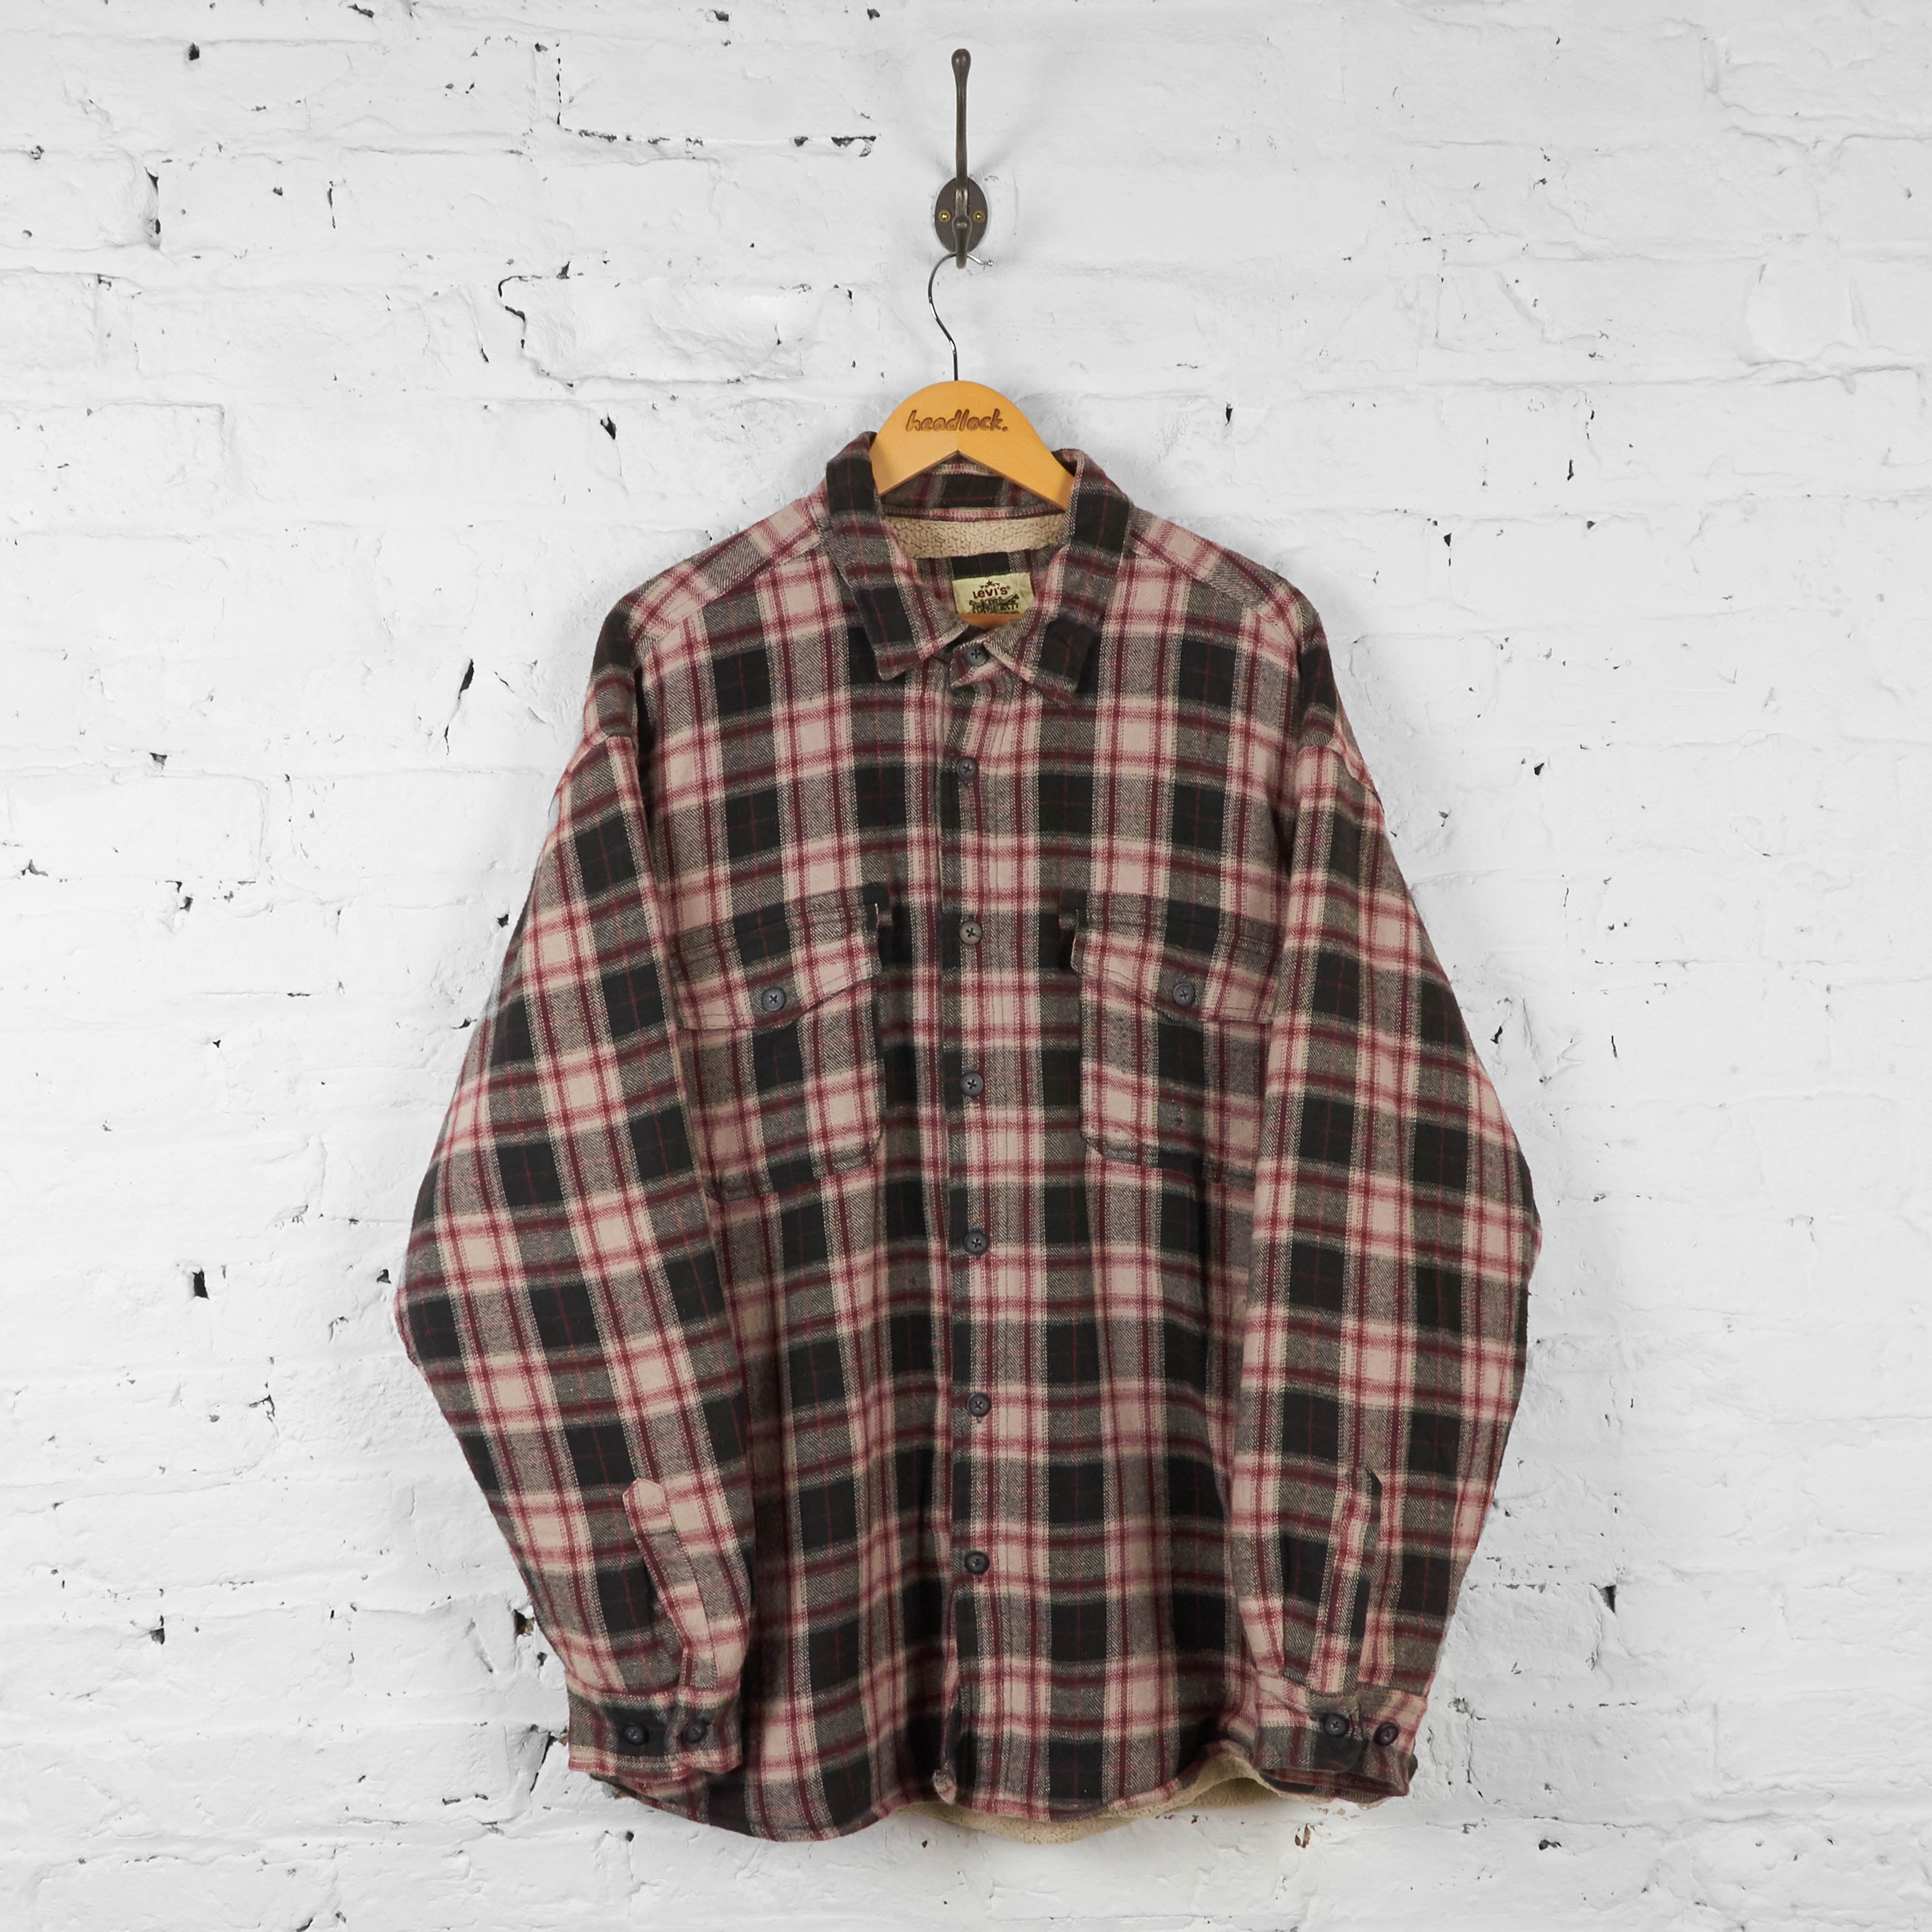 Levis Fleece Lined Check Over Shirt - Brown/Beige - XXL – Headlock